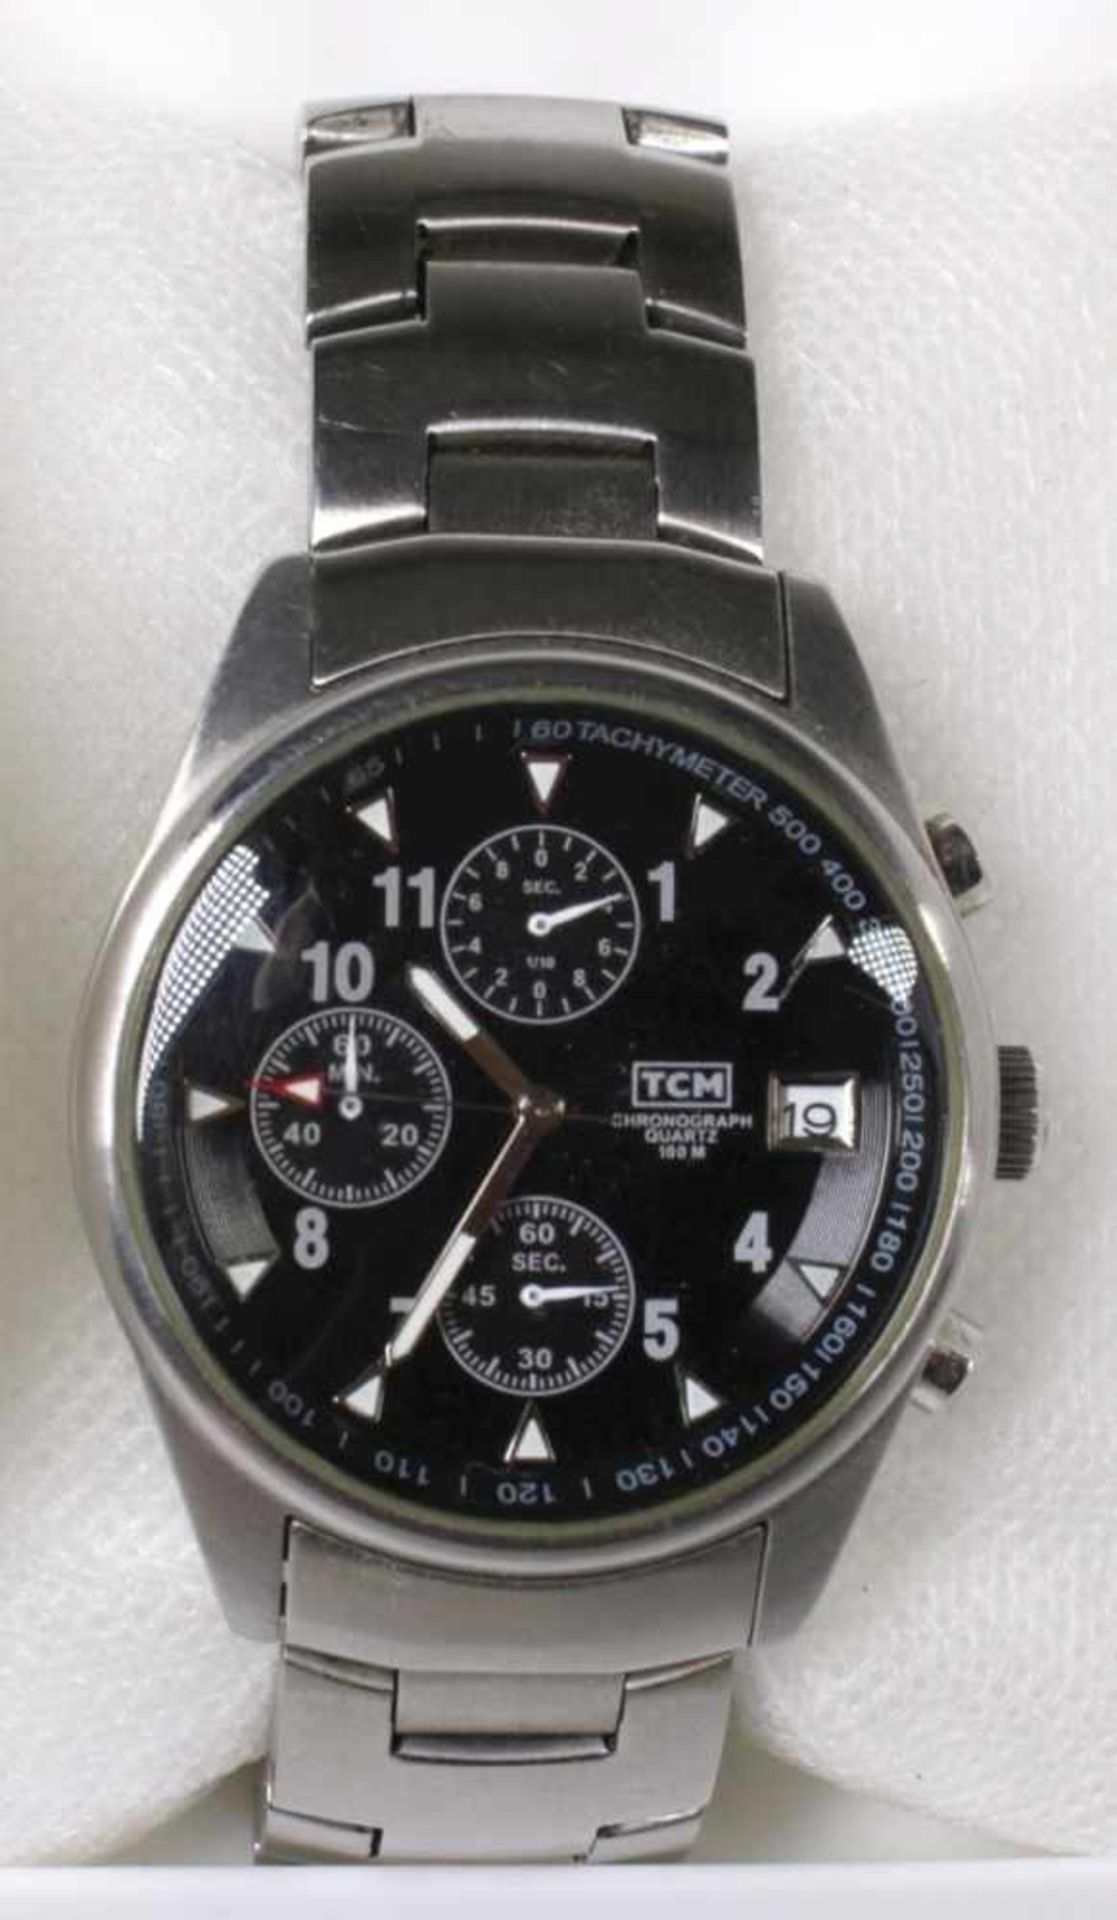 Herren-Armbanduhr, TCM, Quartz, Chronograph, Stahlarmband, intakt, getragen, guter Zustand- - -20.00